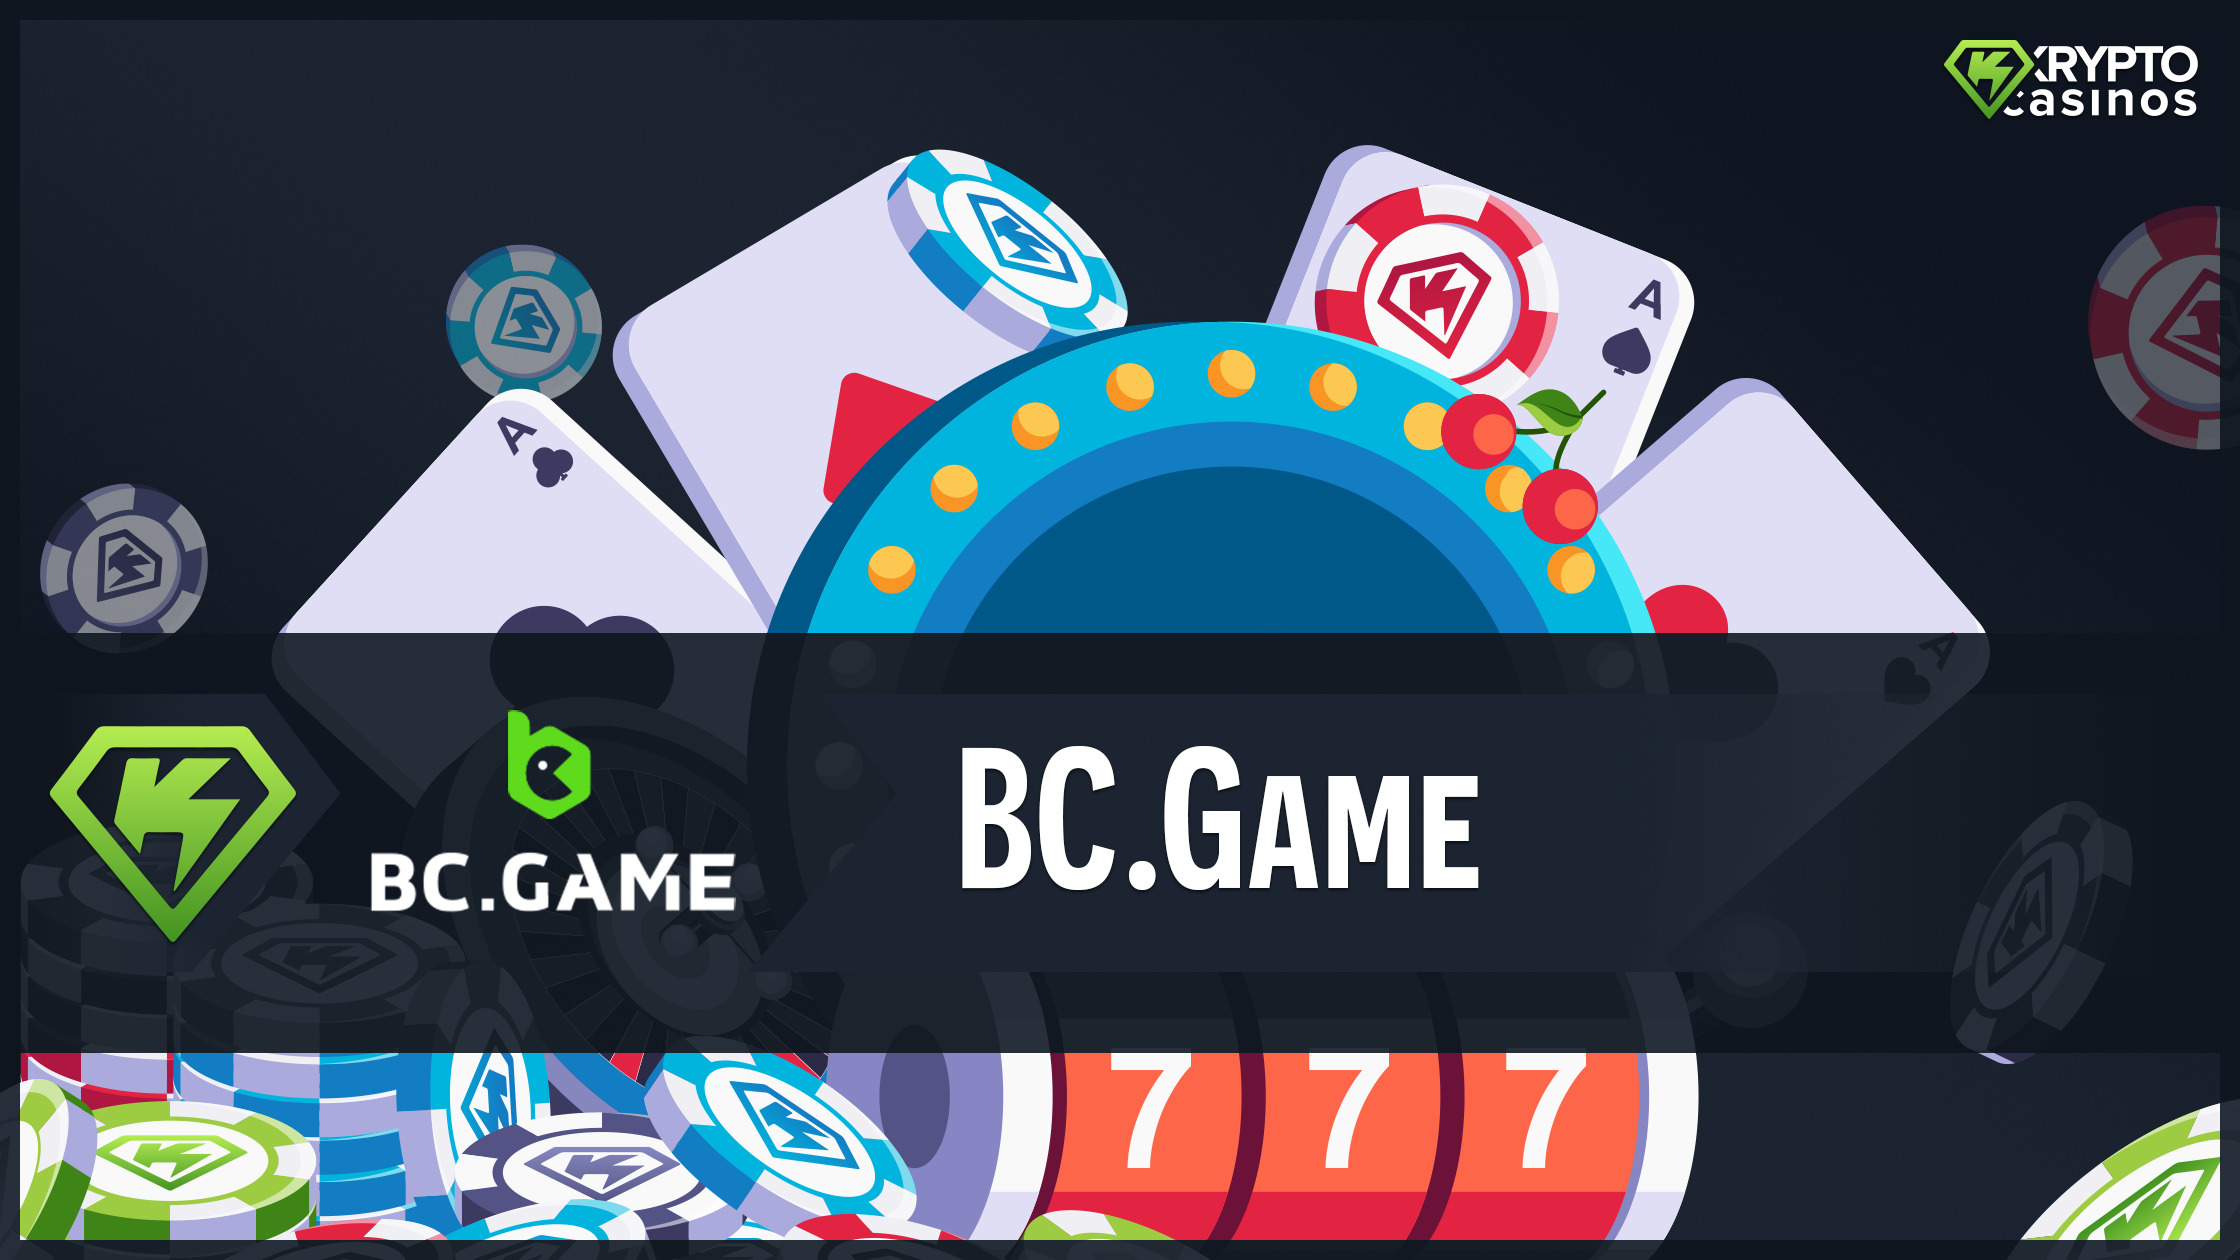 How To Make Your BC Game gcash Look Like A Million Bucks